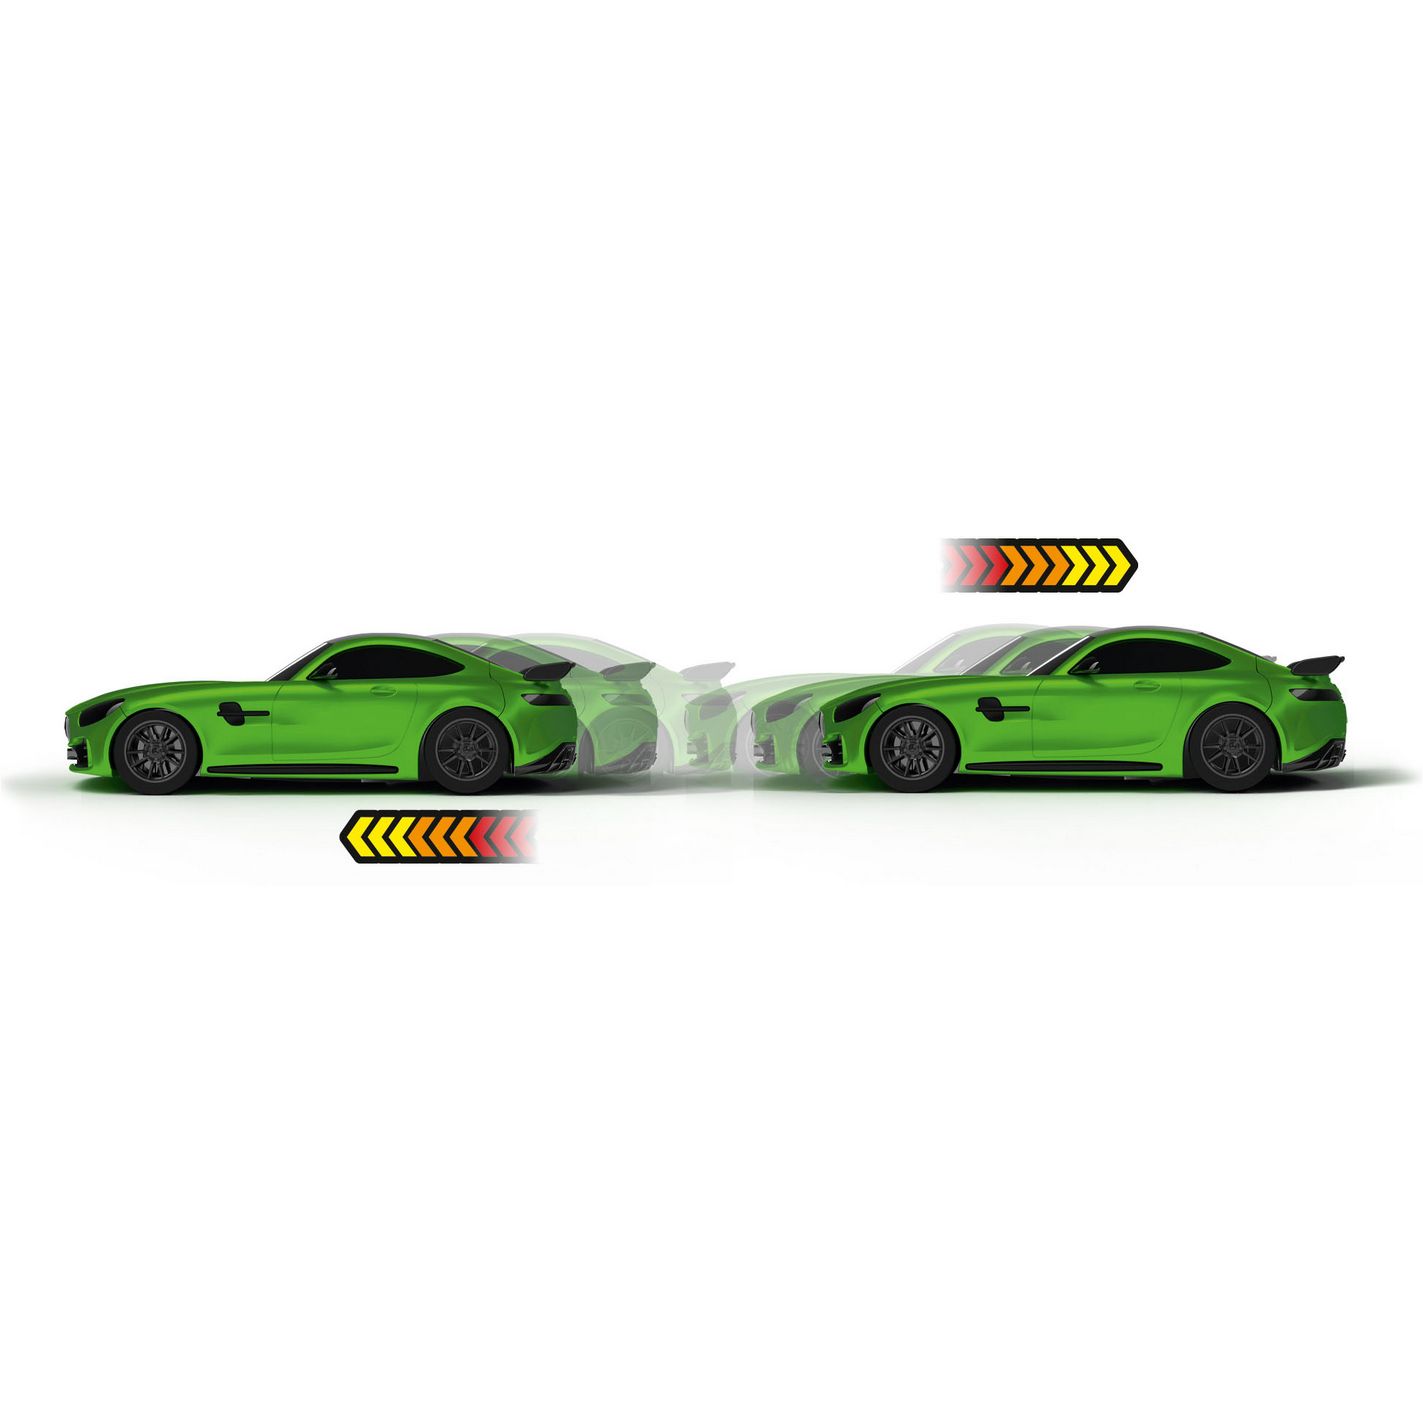 Збірна модель Revell Mercedes-AMG GT R, Green Car, рівень 1, масштаб 1:43, 10 деталей (RVL-23153) - фото 4